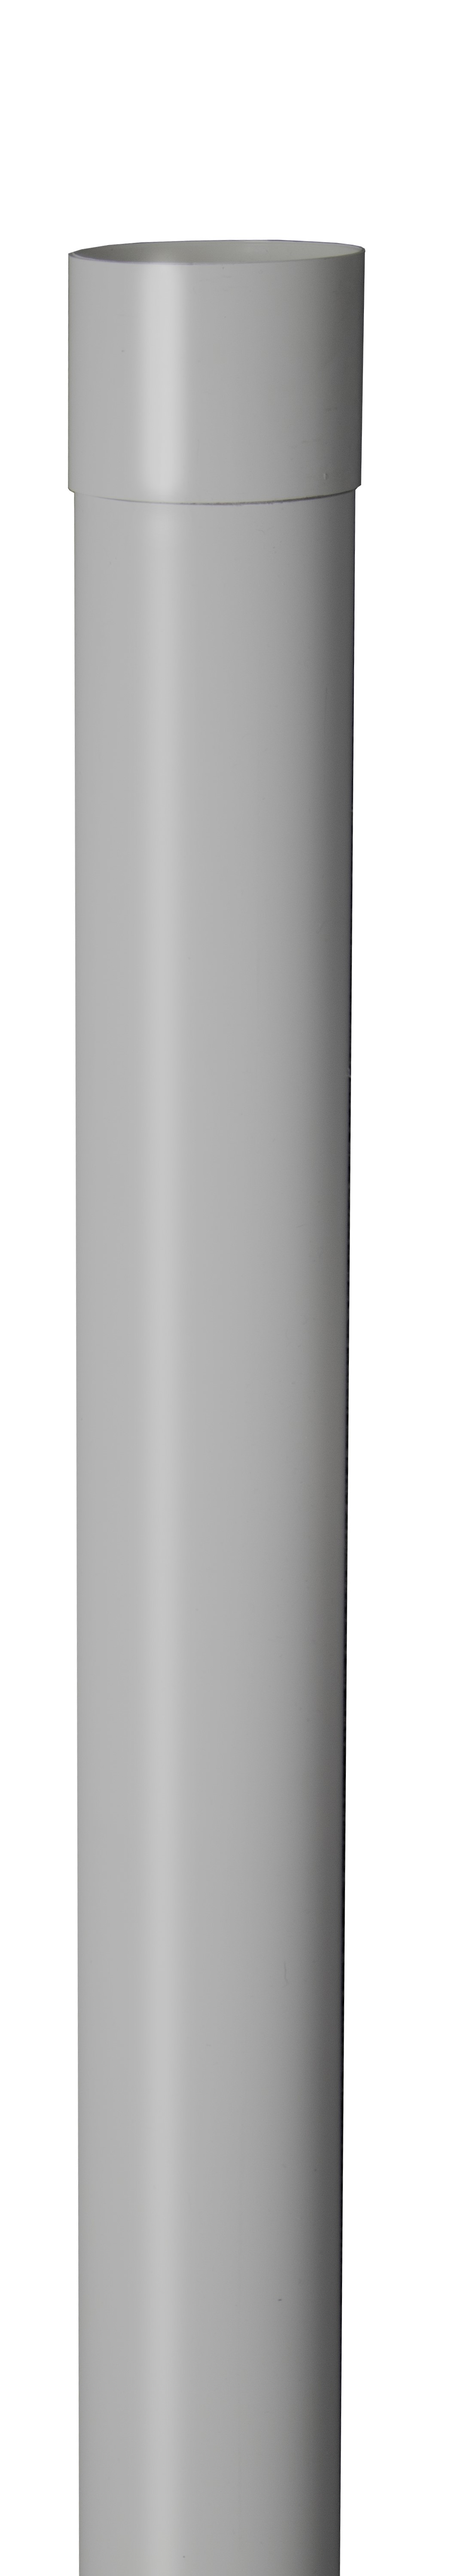 Fallrohr PVC Grau DN75 - 2500 mm lang